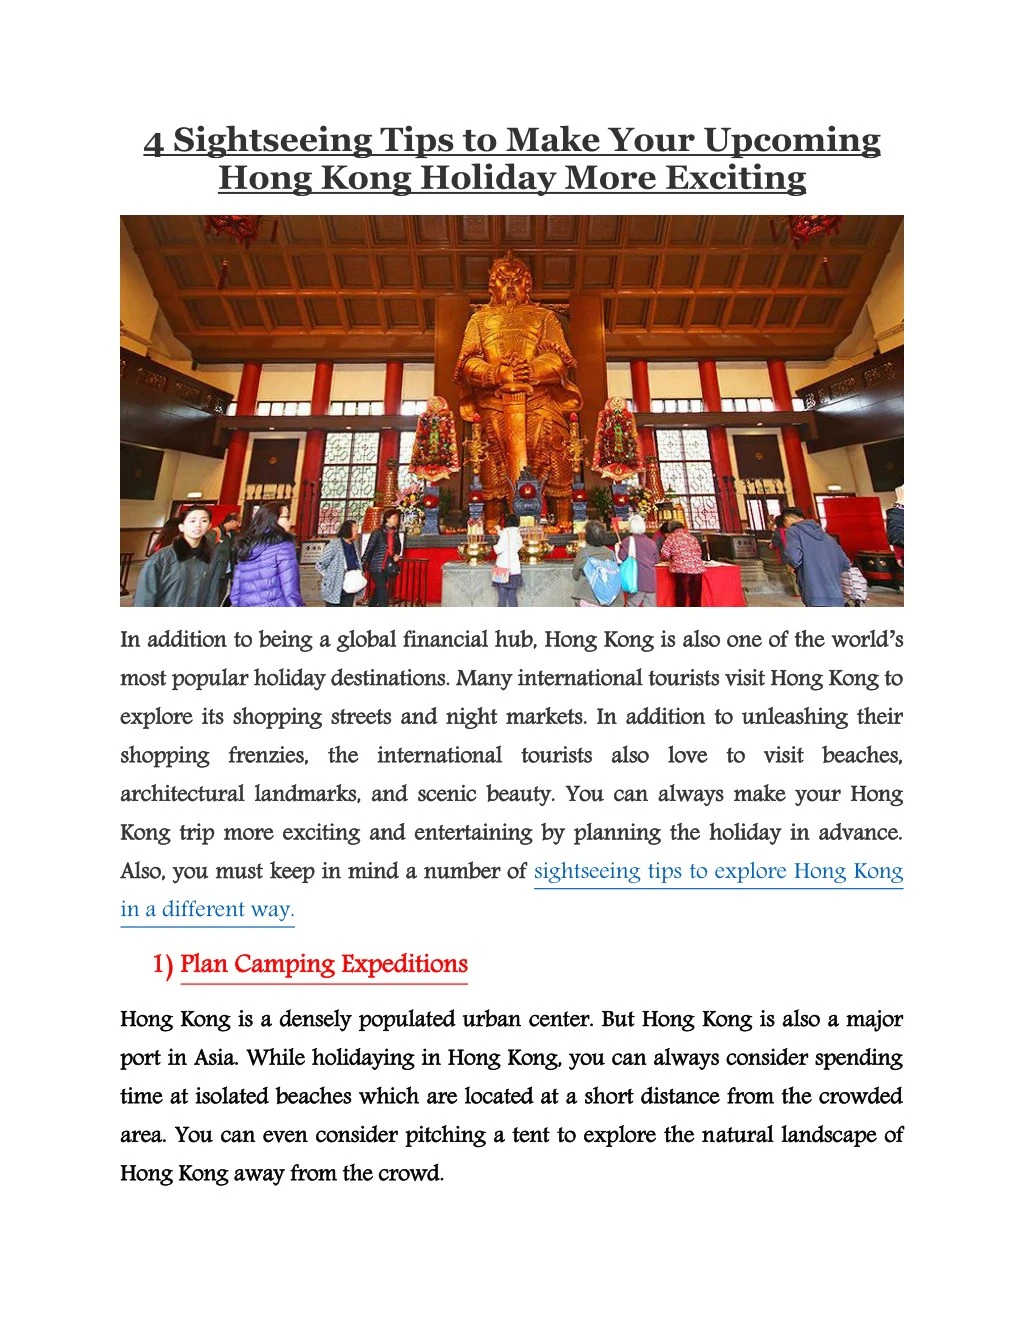 4 sightseeing tips to make your upcoming hong